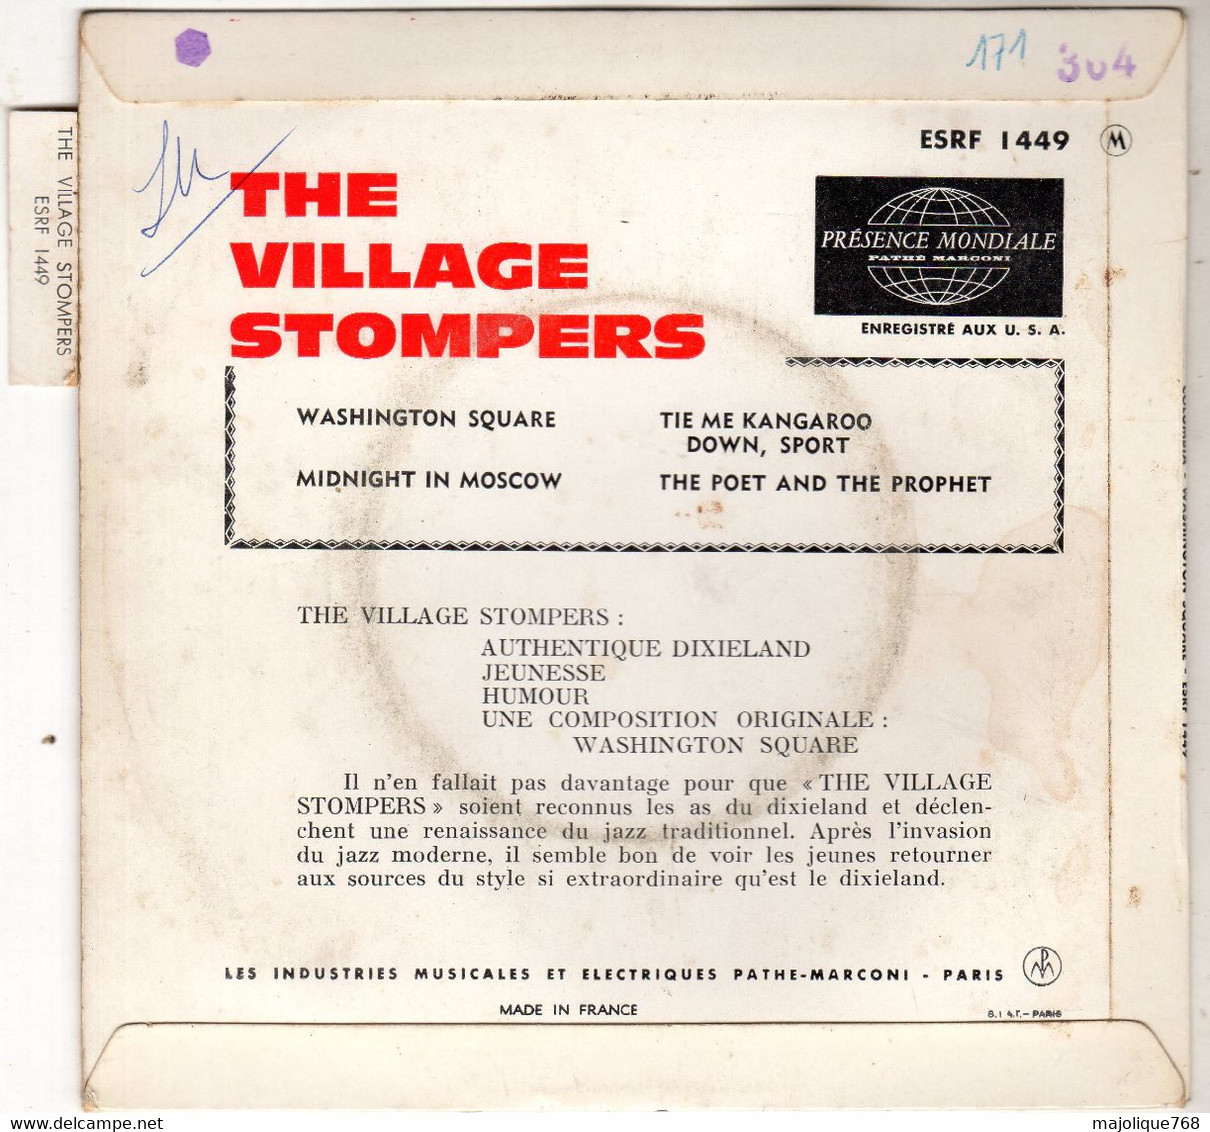 Disque De The Village Stompers - Washington Square - Columbia ESRF 1449 - France 1963 - Jazz